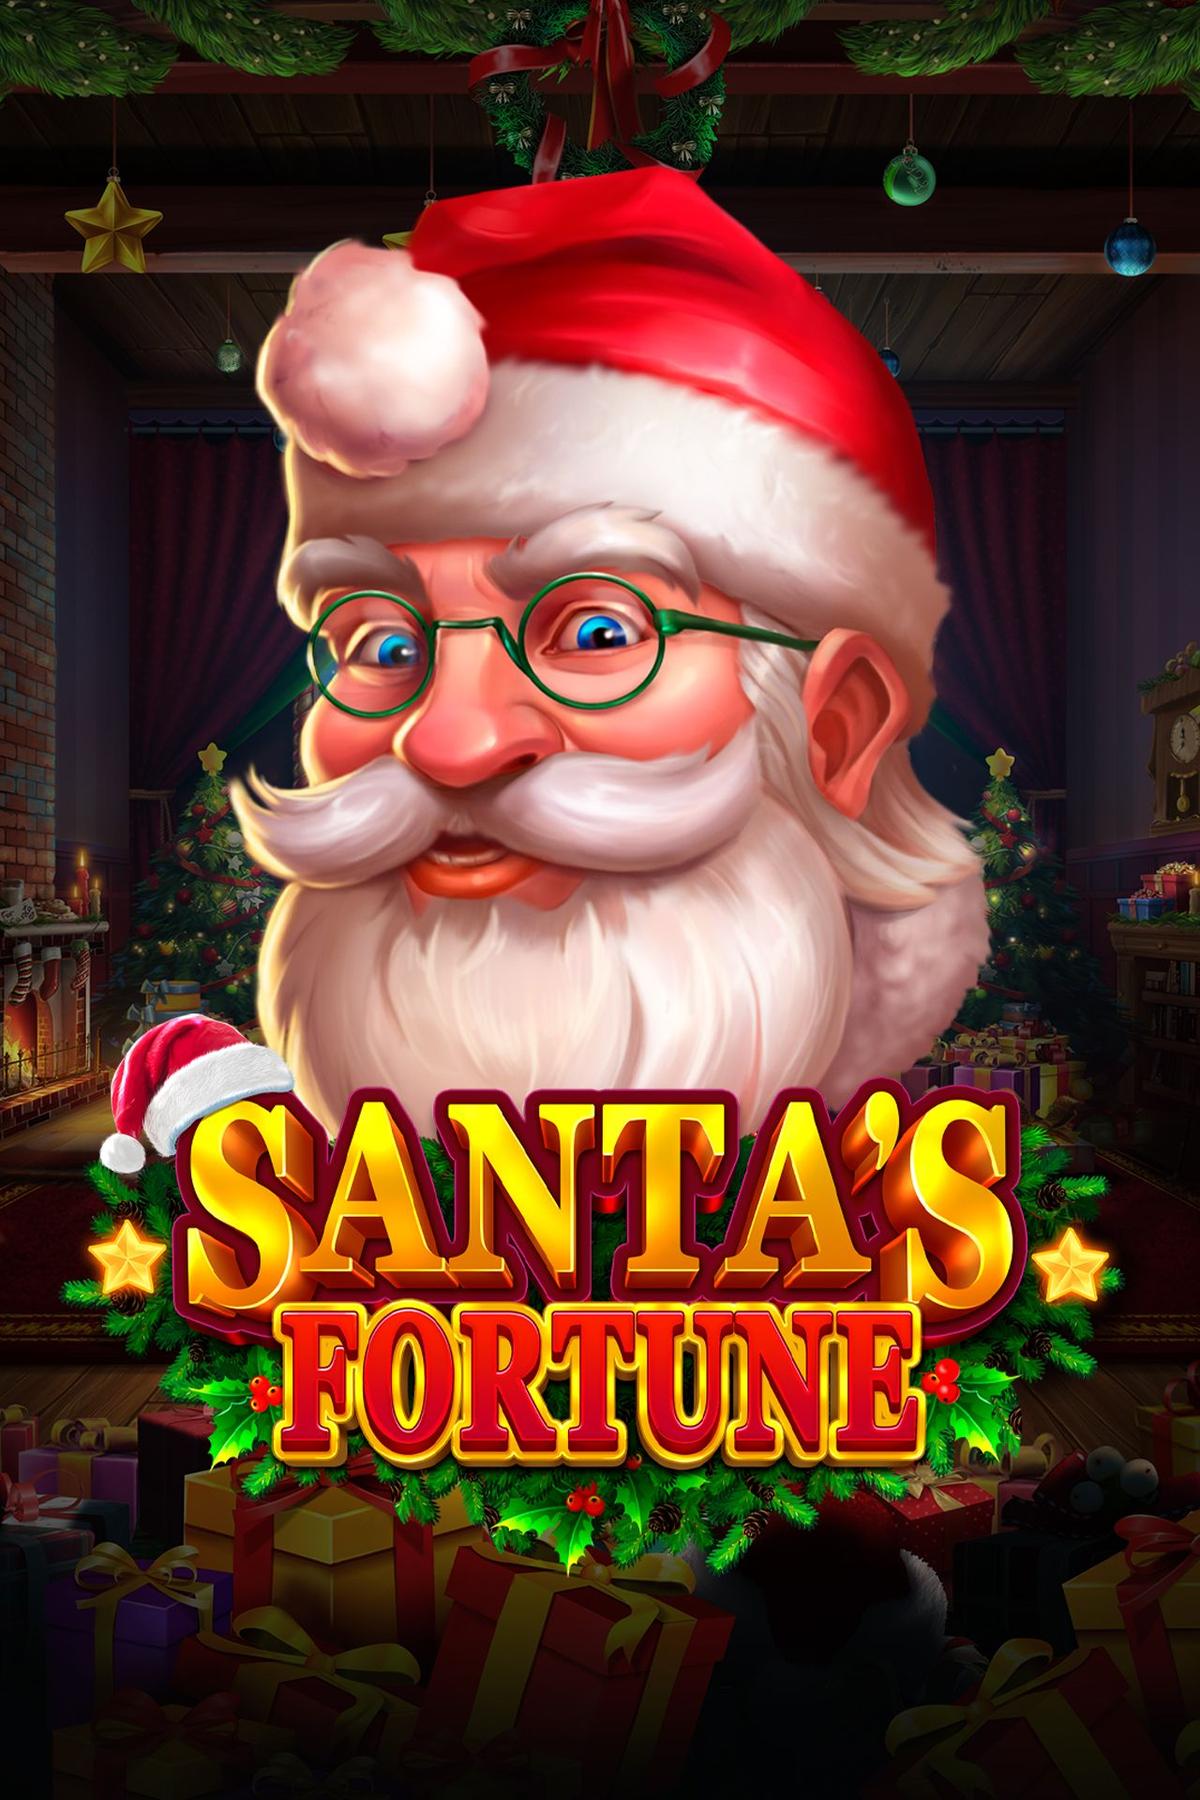 Santa's Fortune